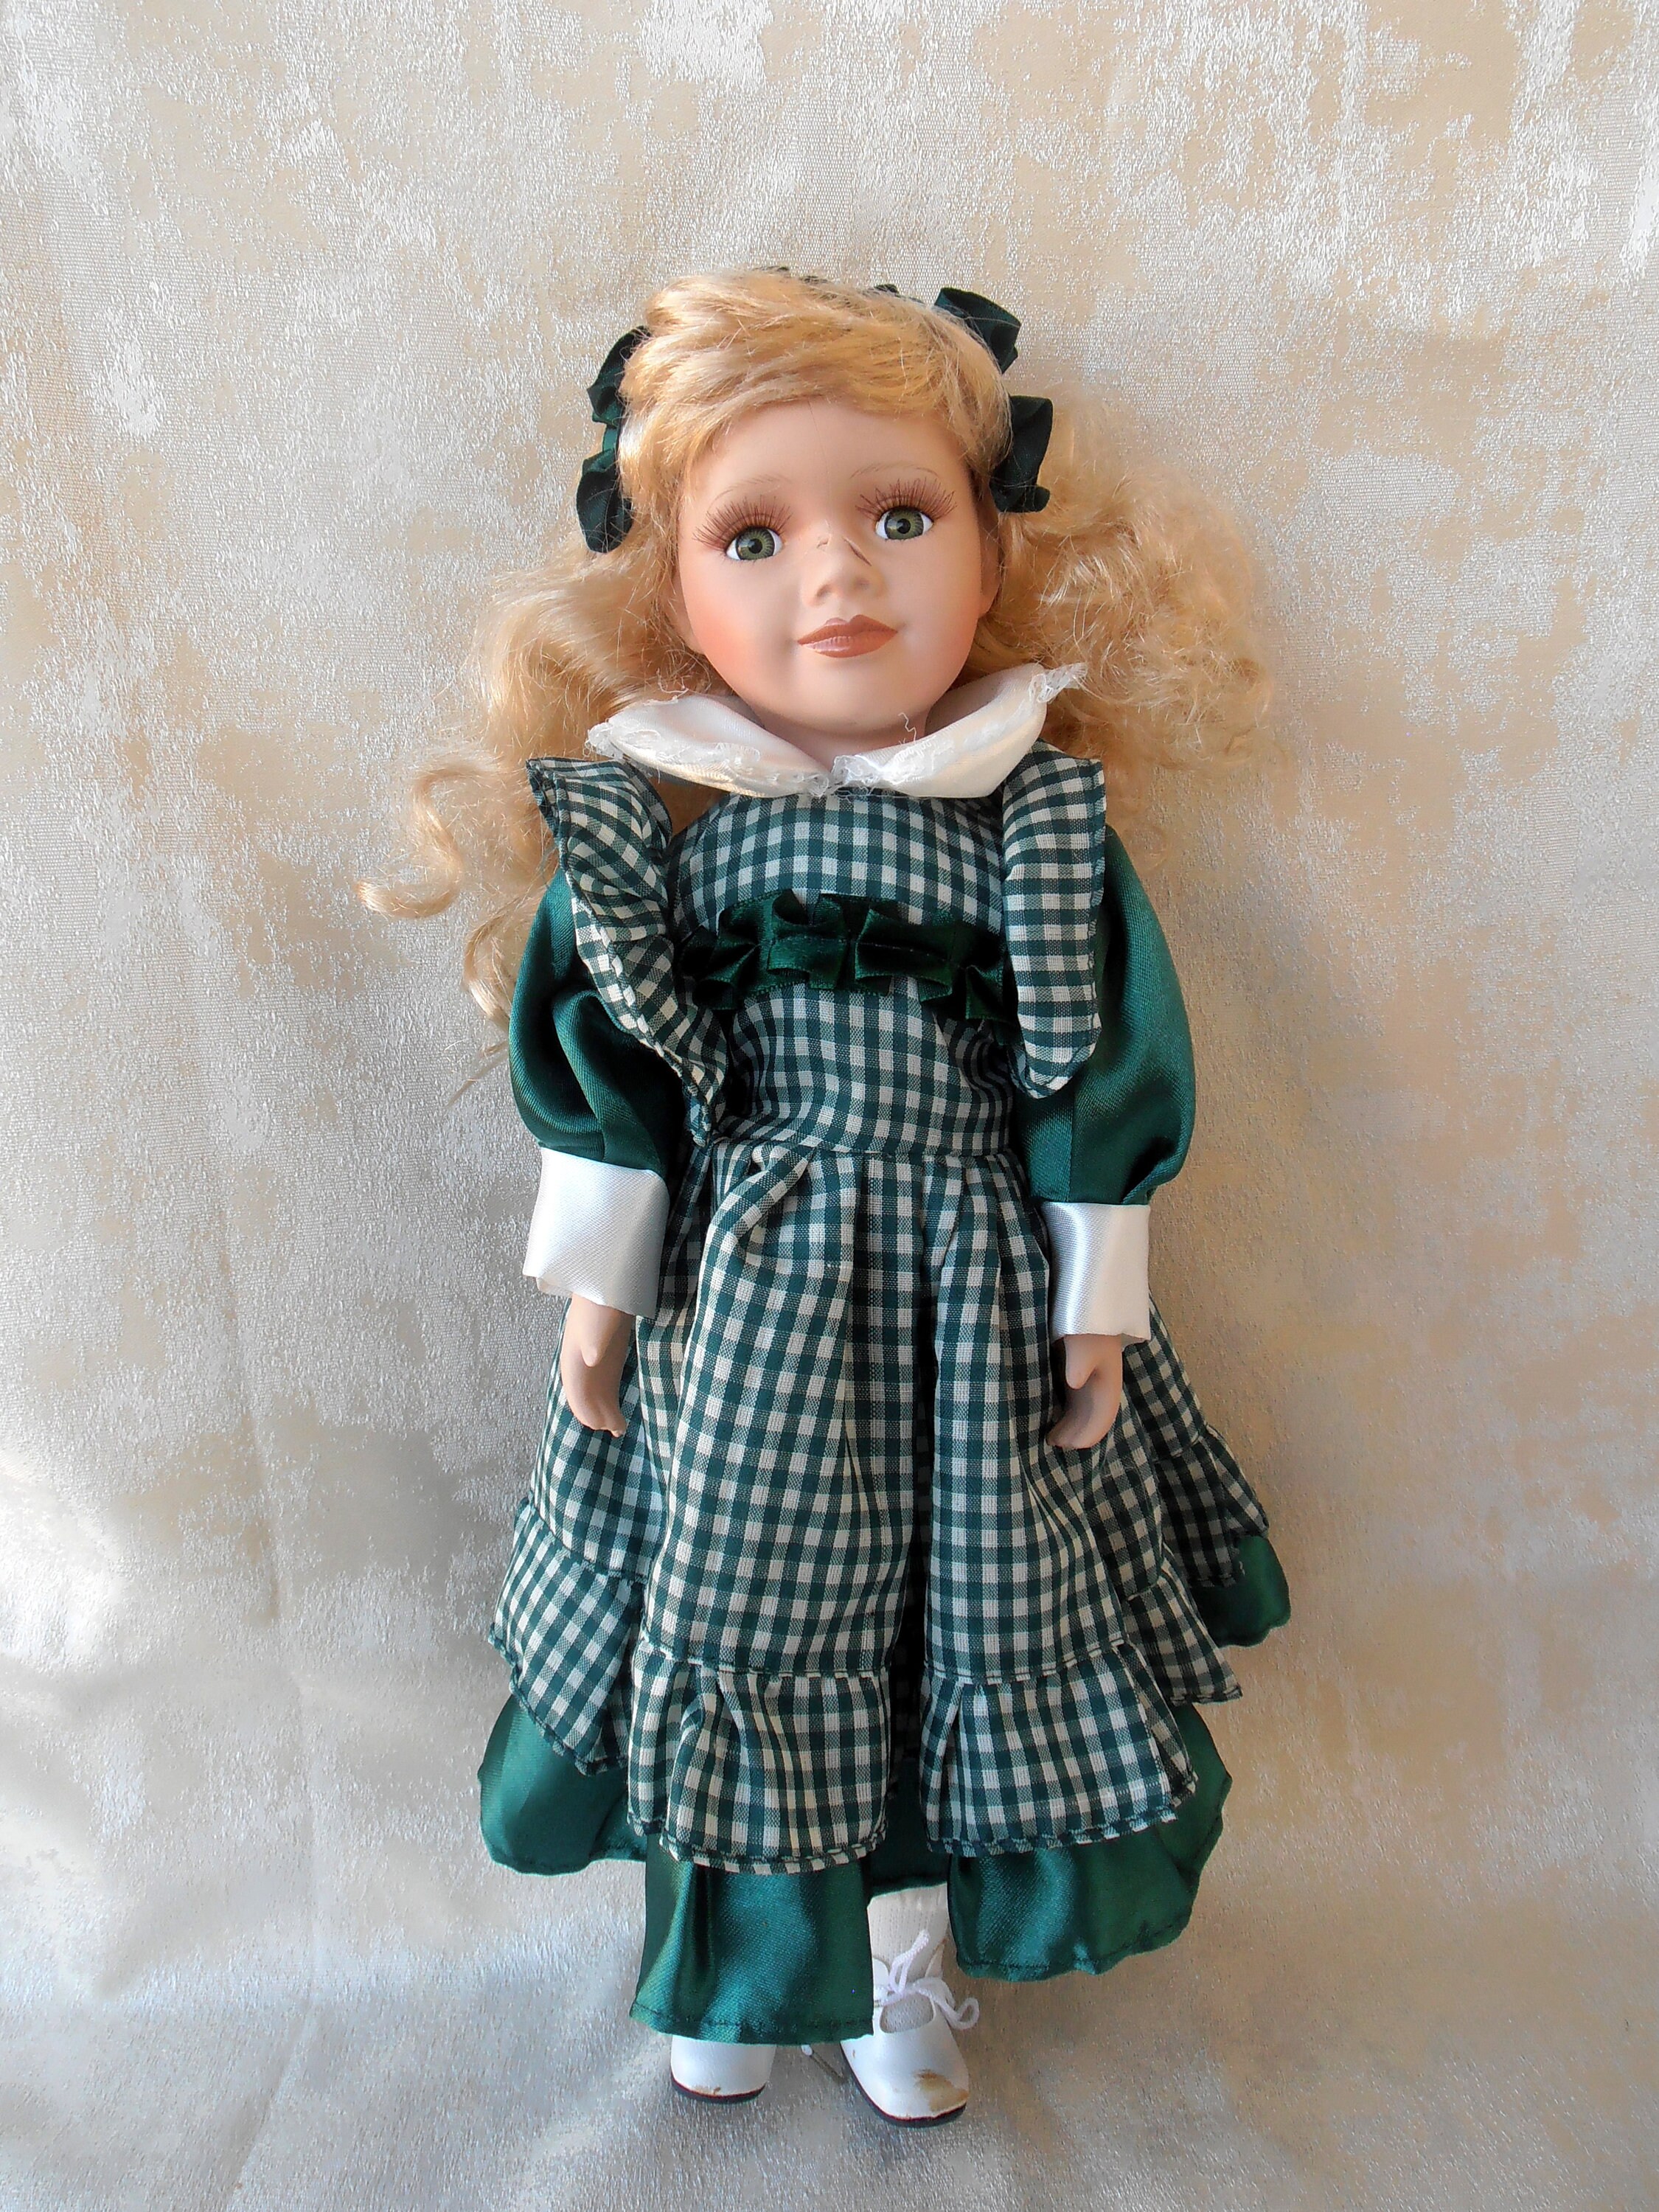 Collectible Vintage Porcelain Doll Doll Vintage Ceramic - Etsy